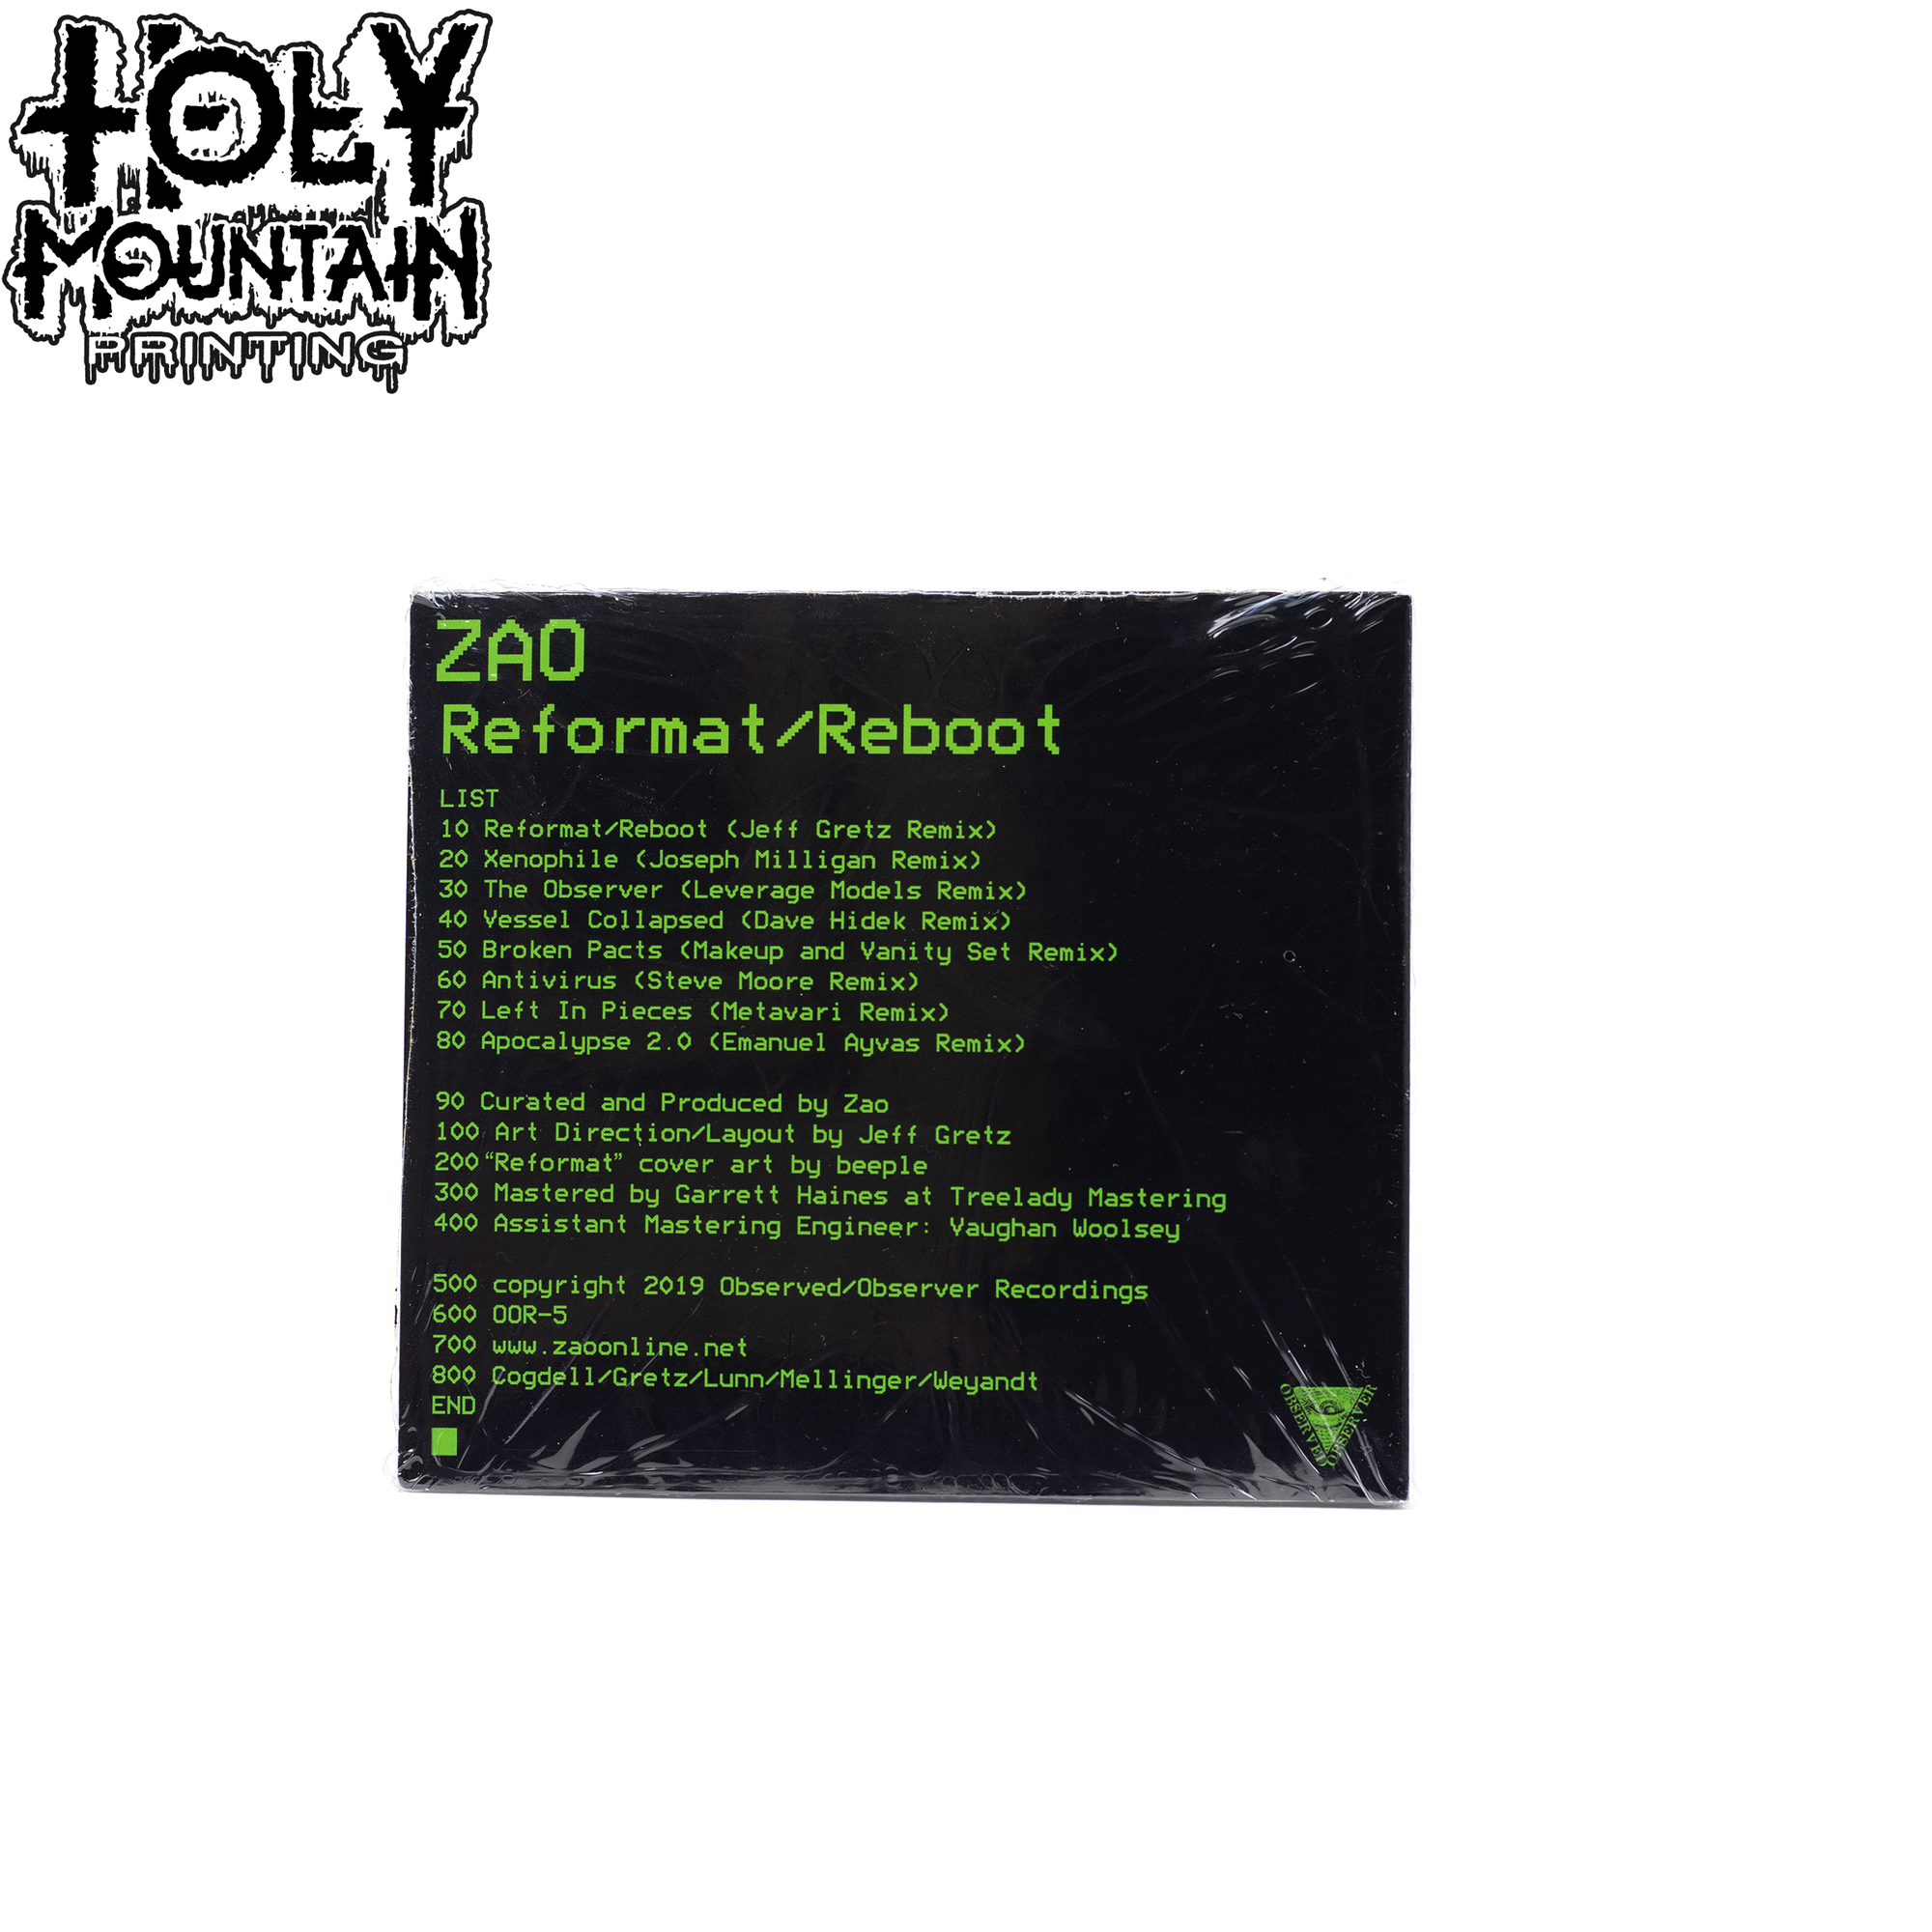 ZAO "Reformat/Reboot" CD